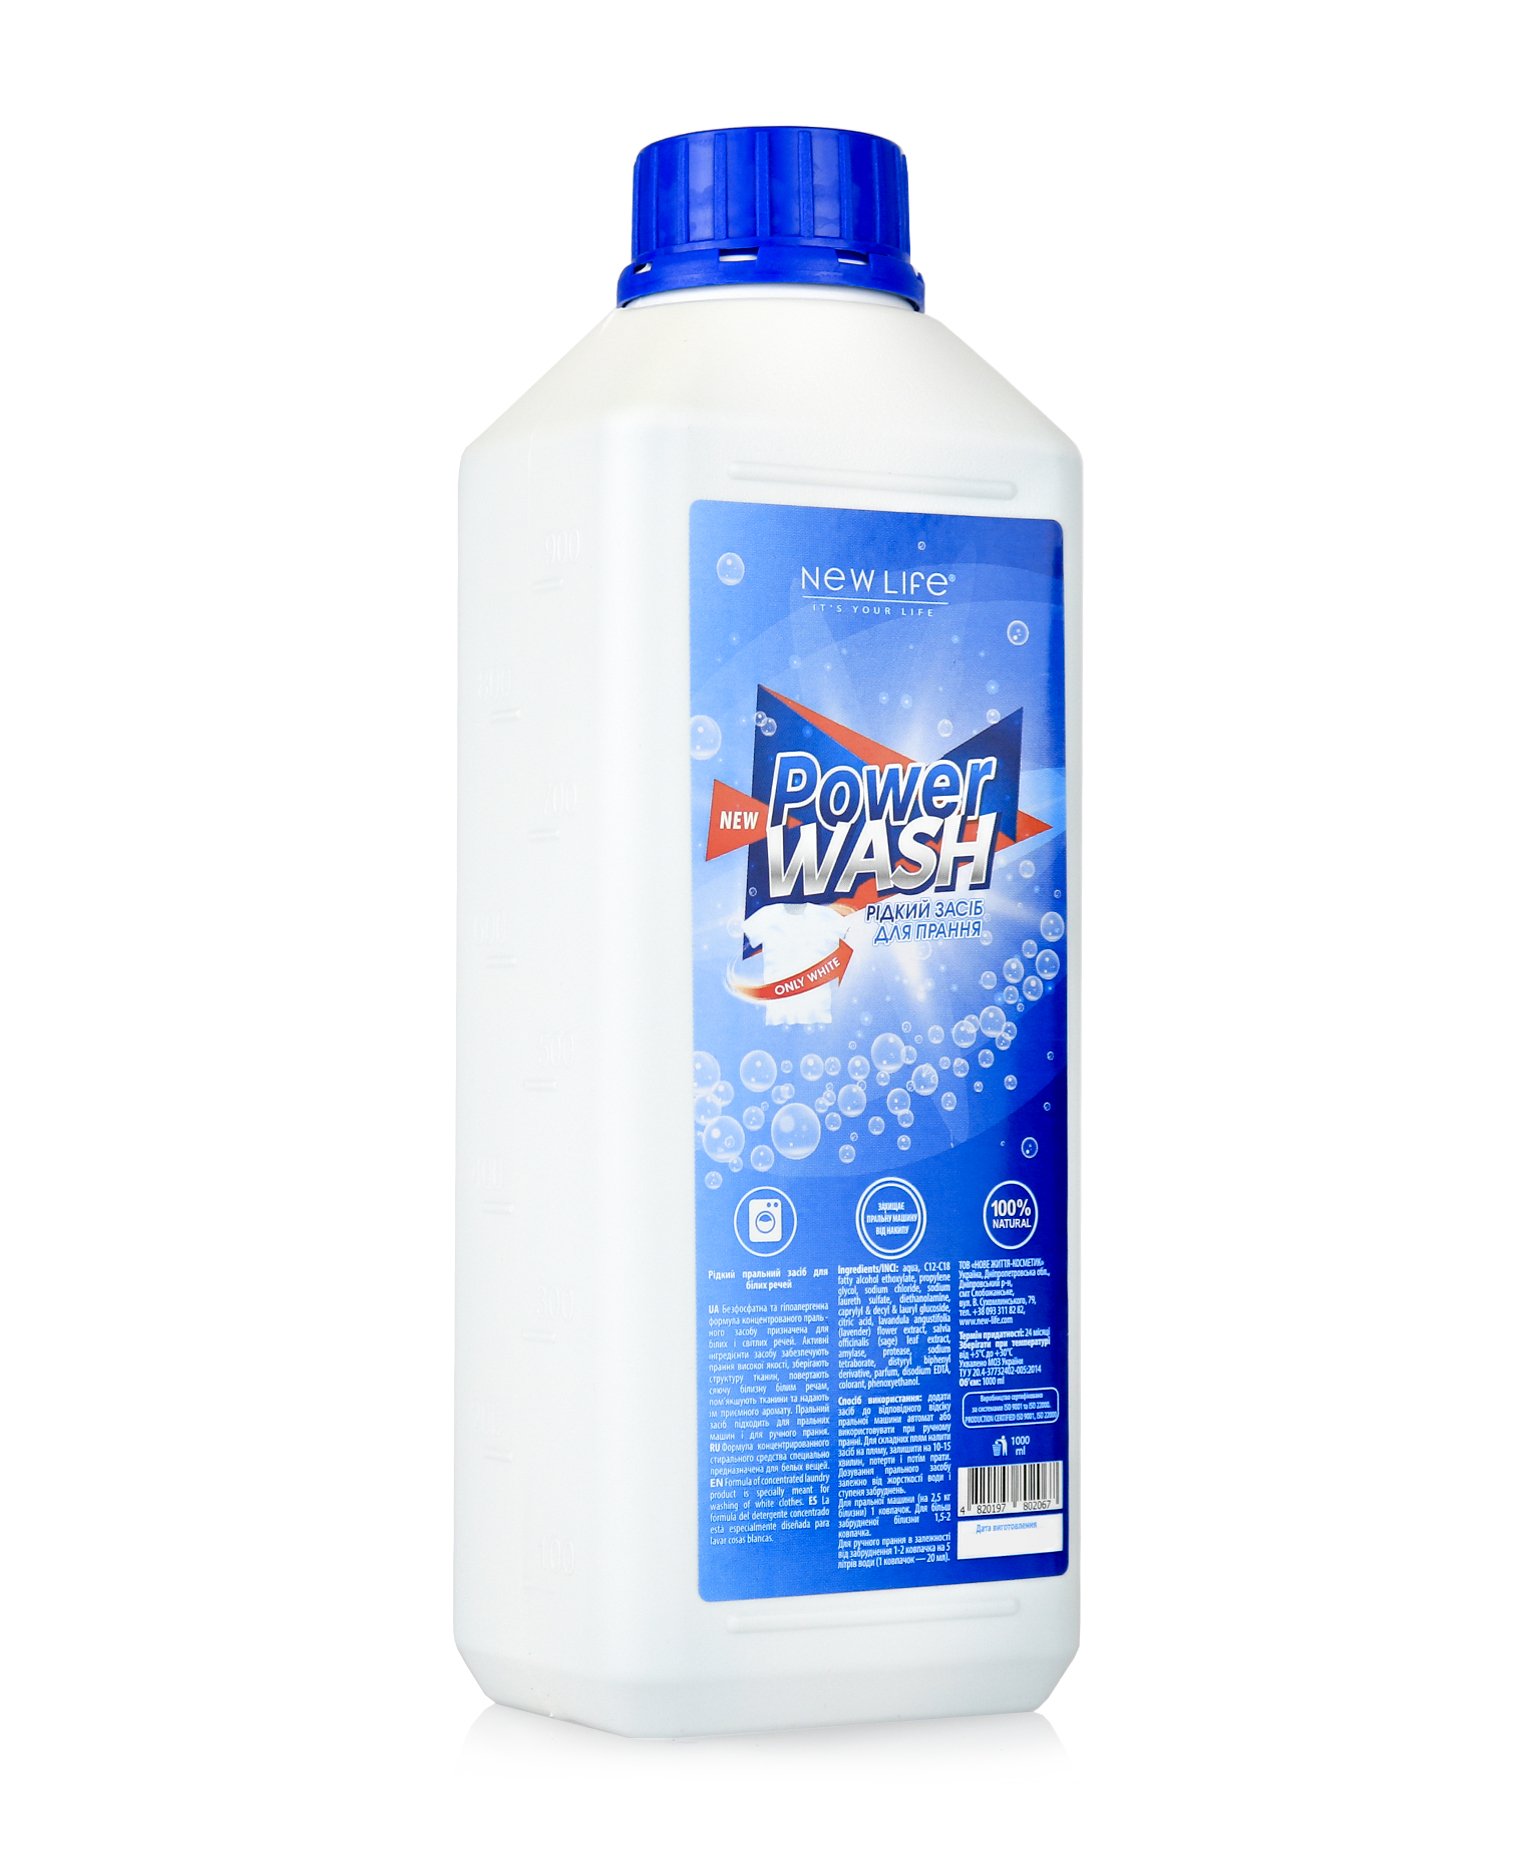 Detergente líquido para lavar ropa POWER WASH 1l NEW LIFE - Tienda oficial online - NEW LIFE